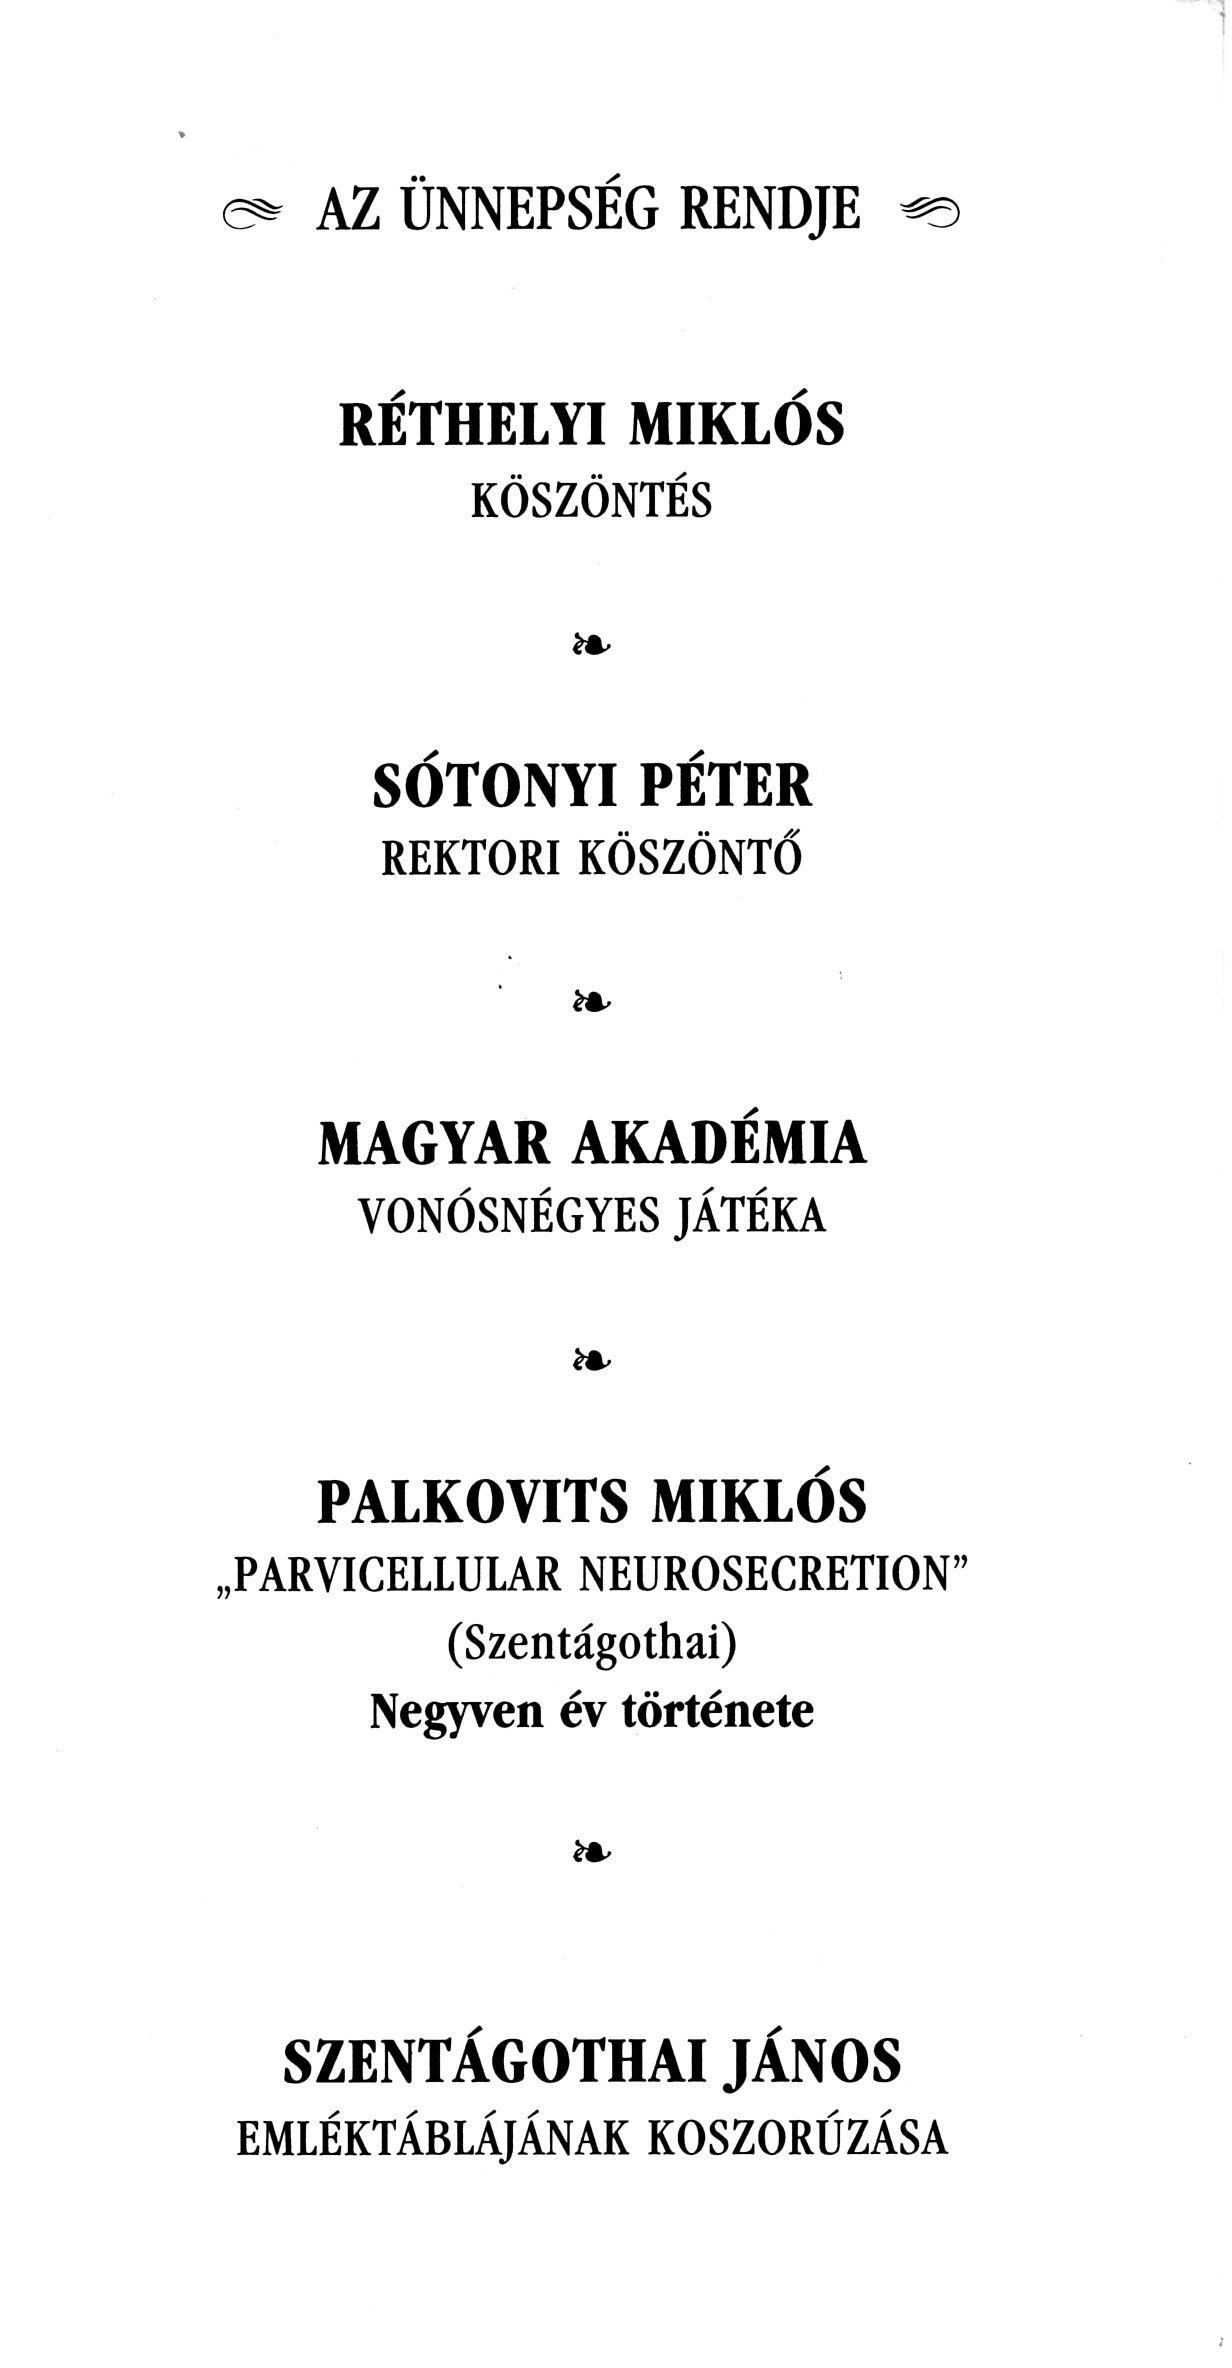 The program of the "Szentagothai Memorial Lecture" in 2001. Keynote speaker: M. Palkovits